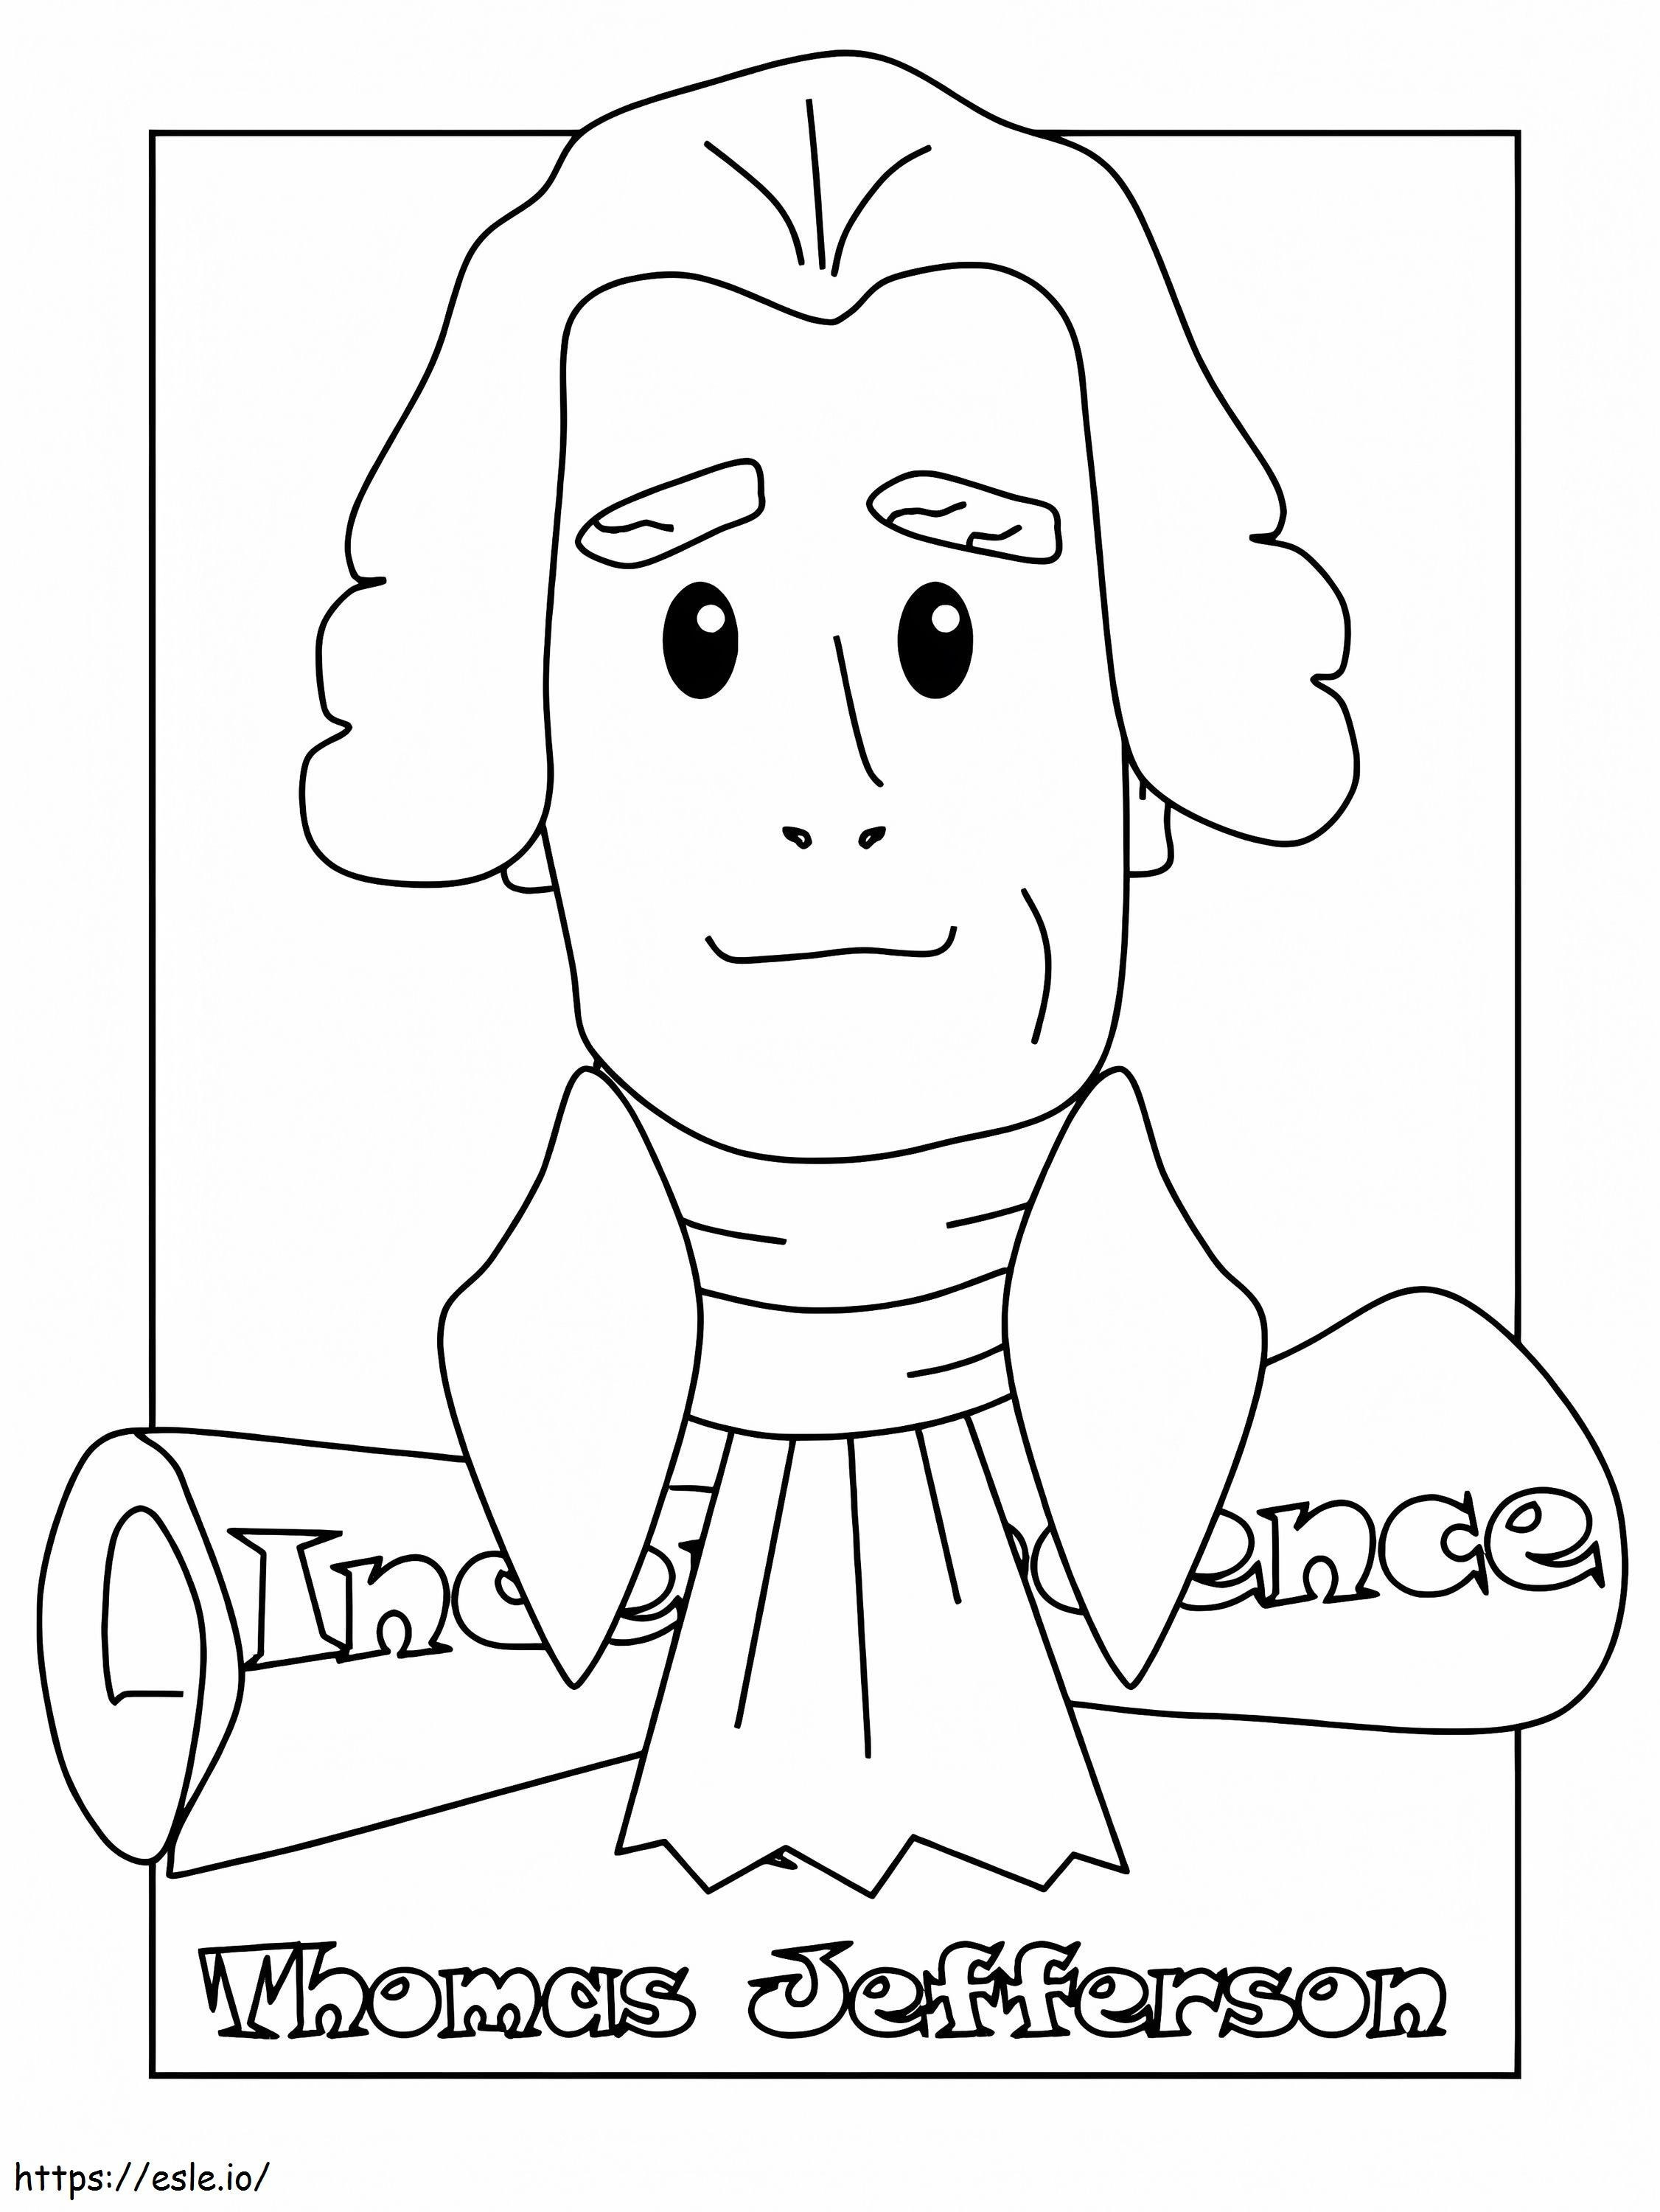 Thomas Jefferson US President coloring page